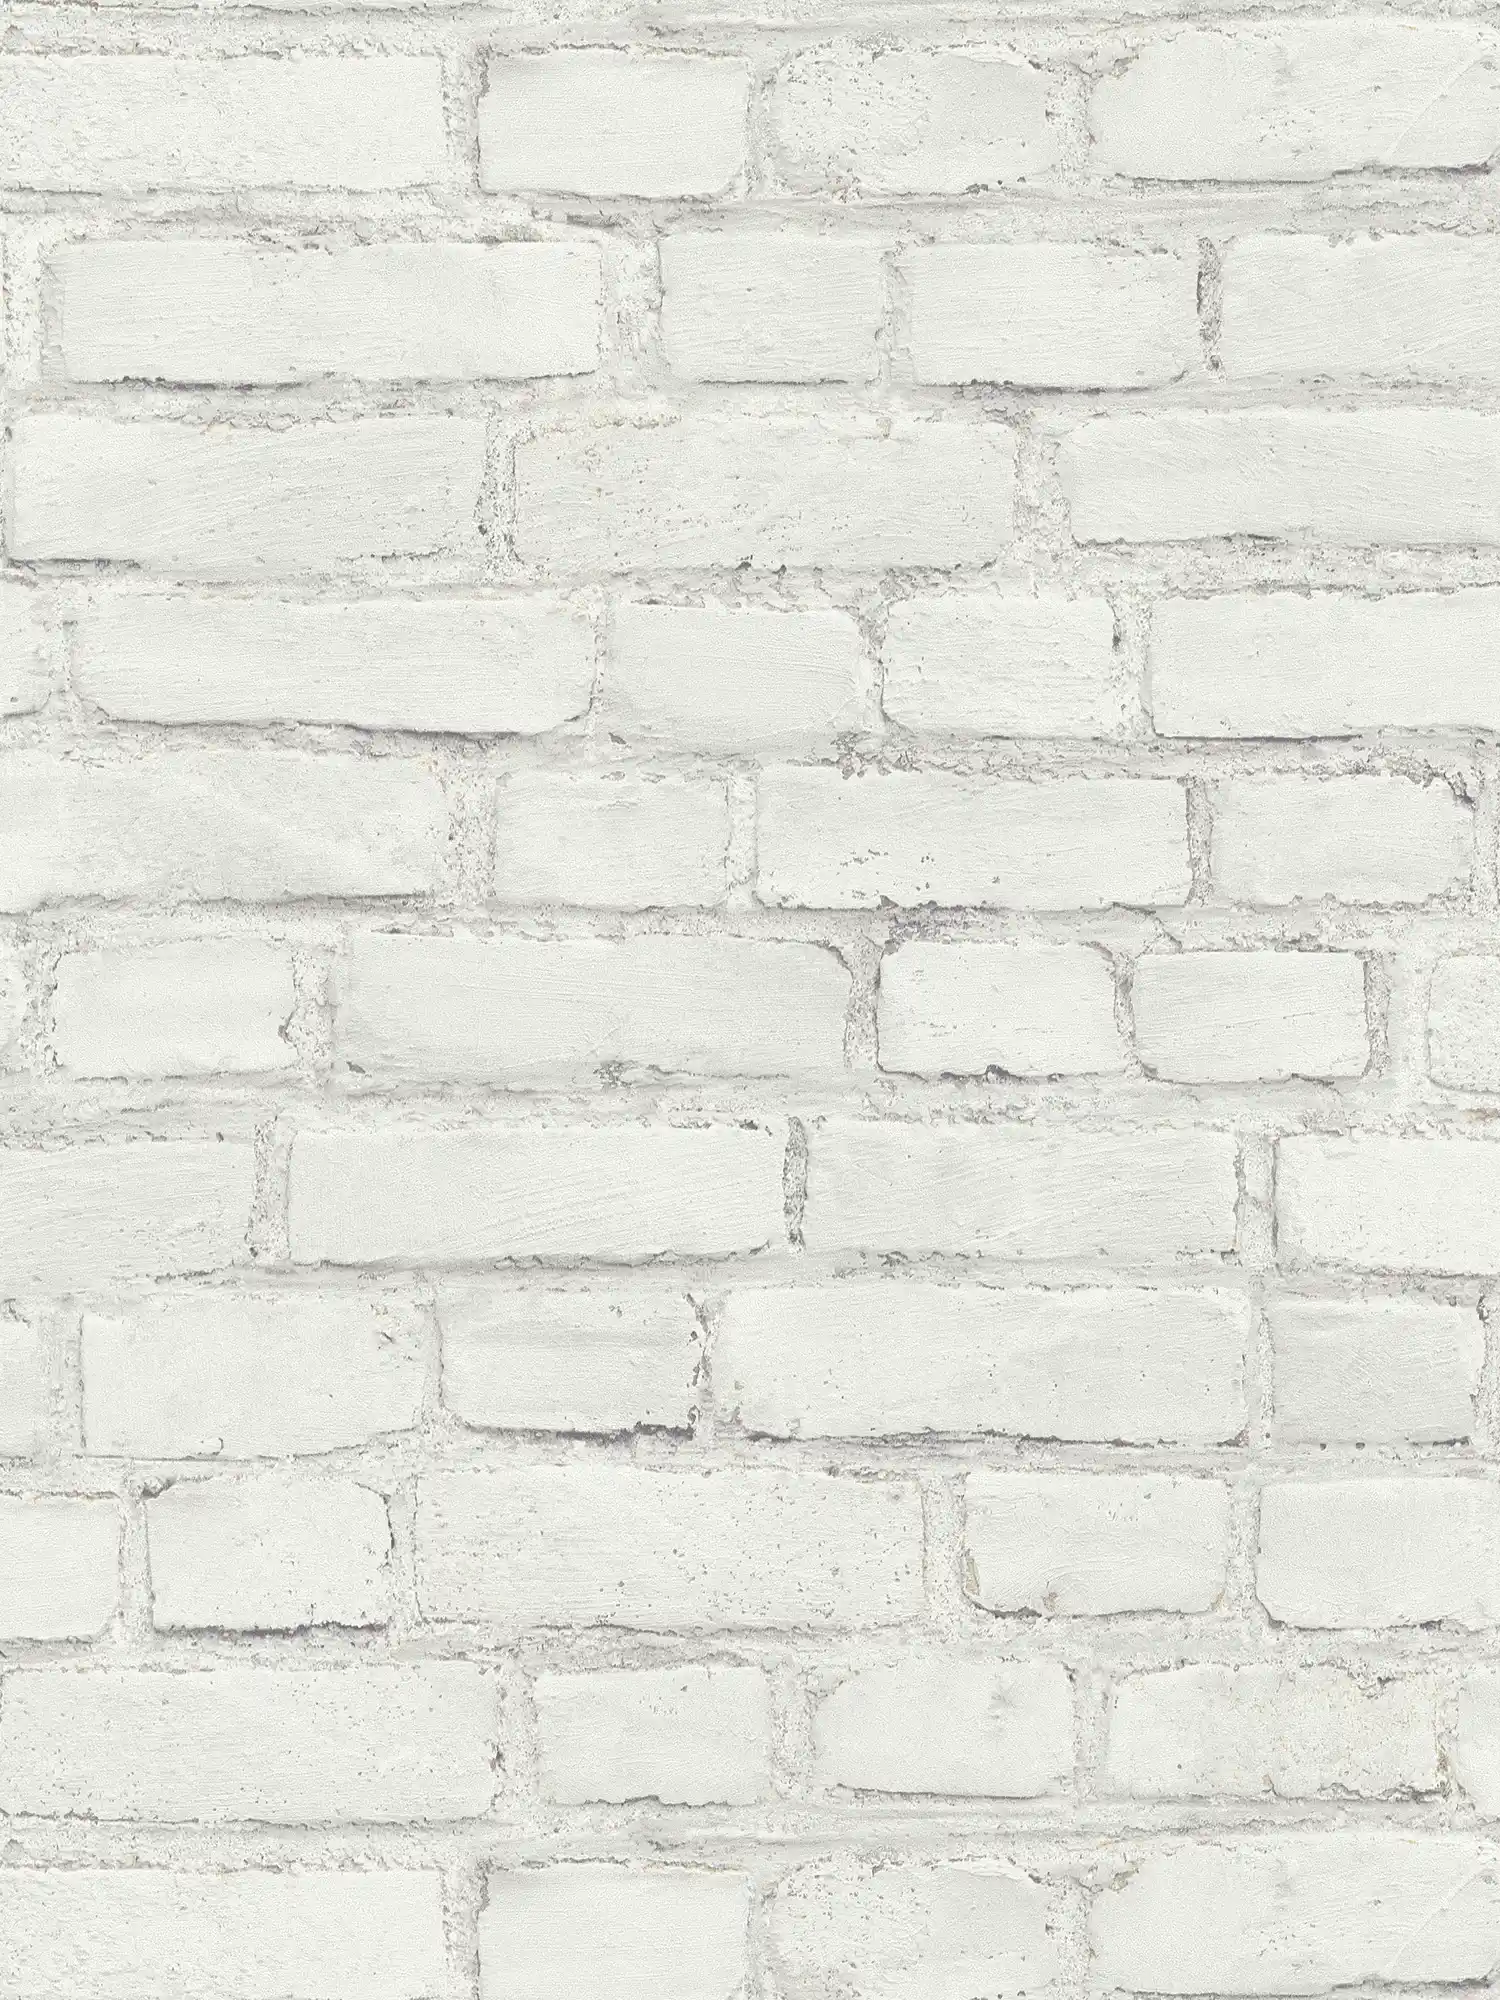         Papel pintado con óptica de pared, pared de ladrillo pintado - blanco, gris
    